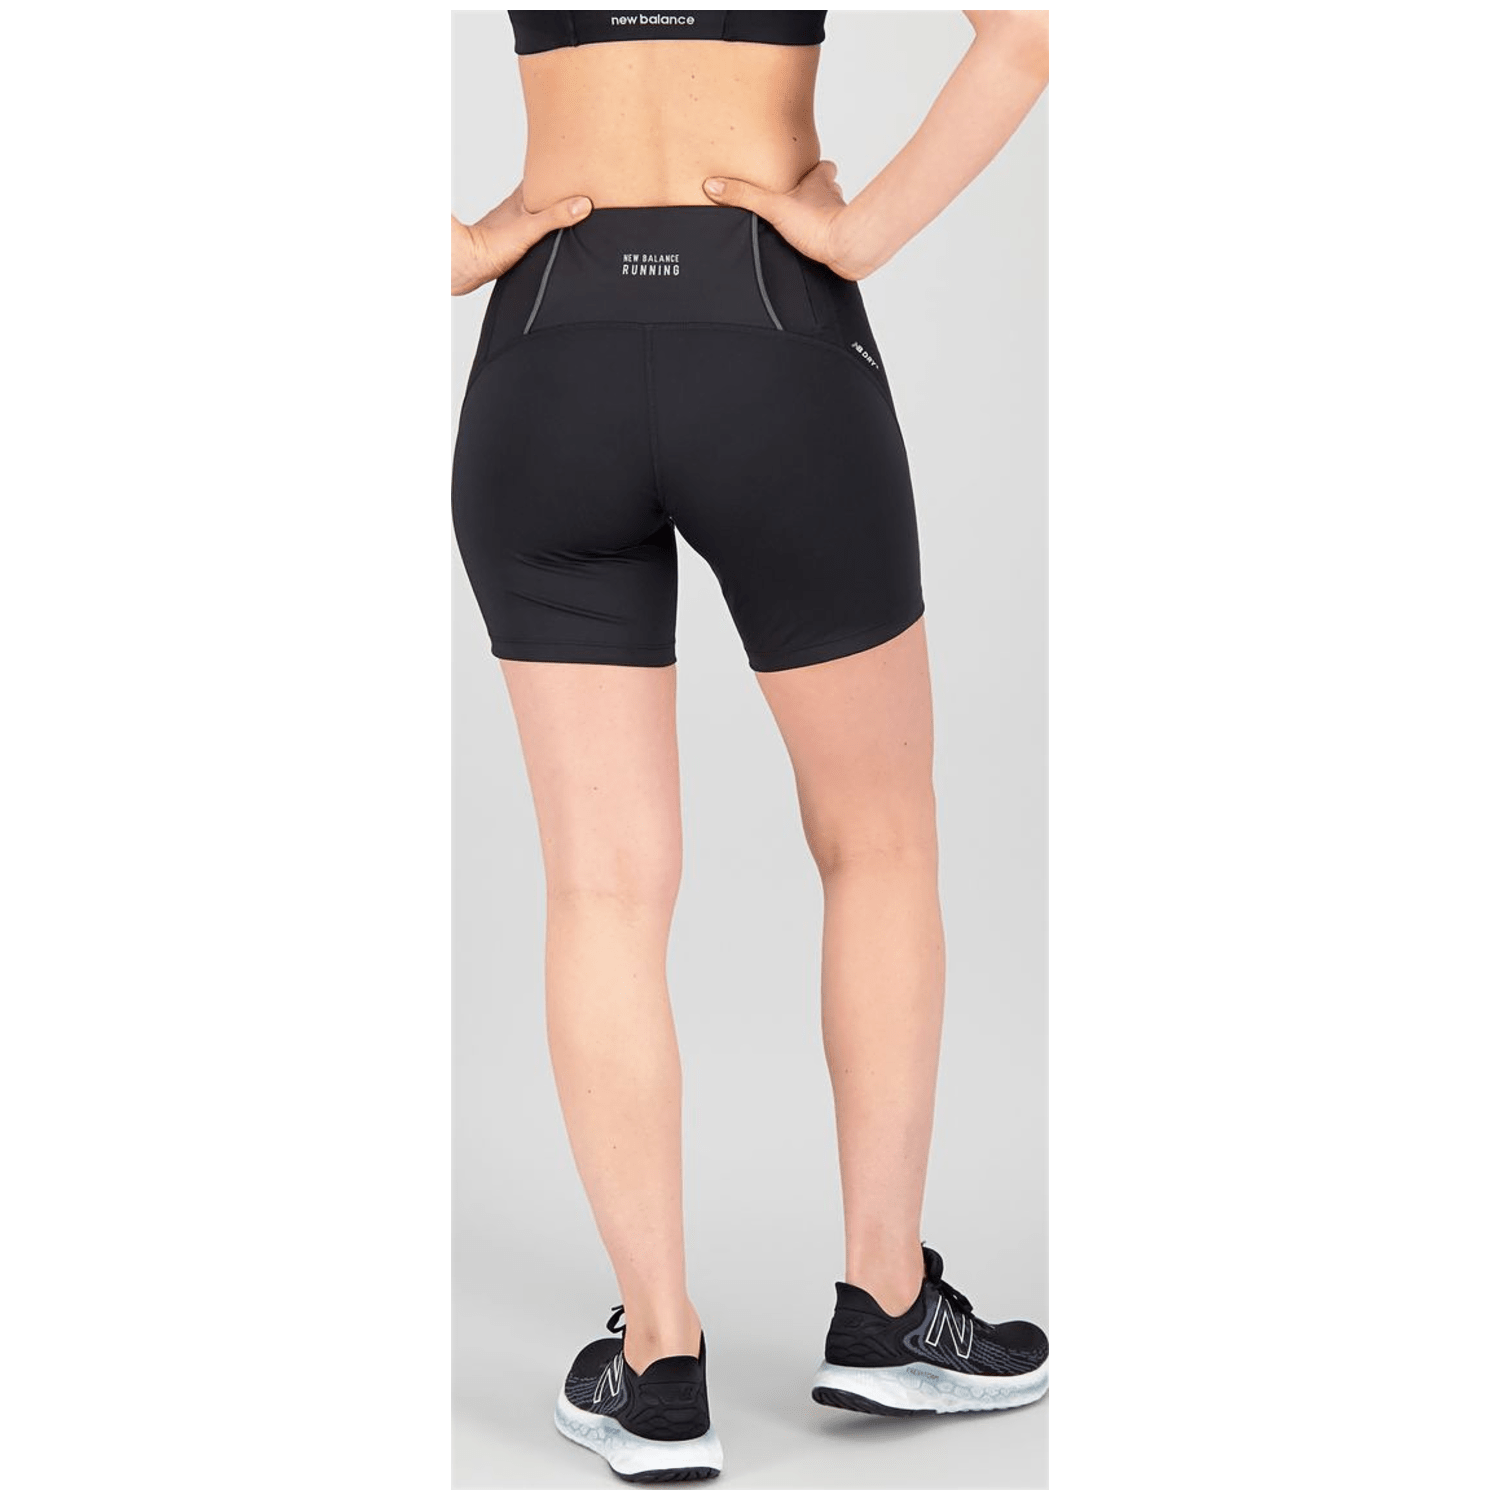 New Balance Impact Run Fitted Short Damen Shorts